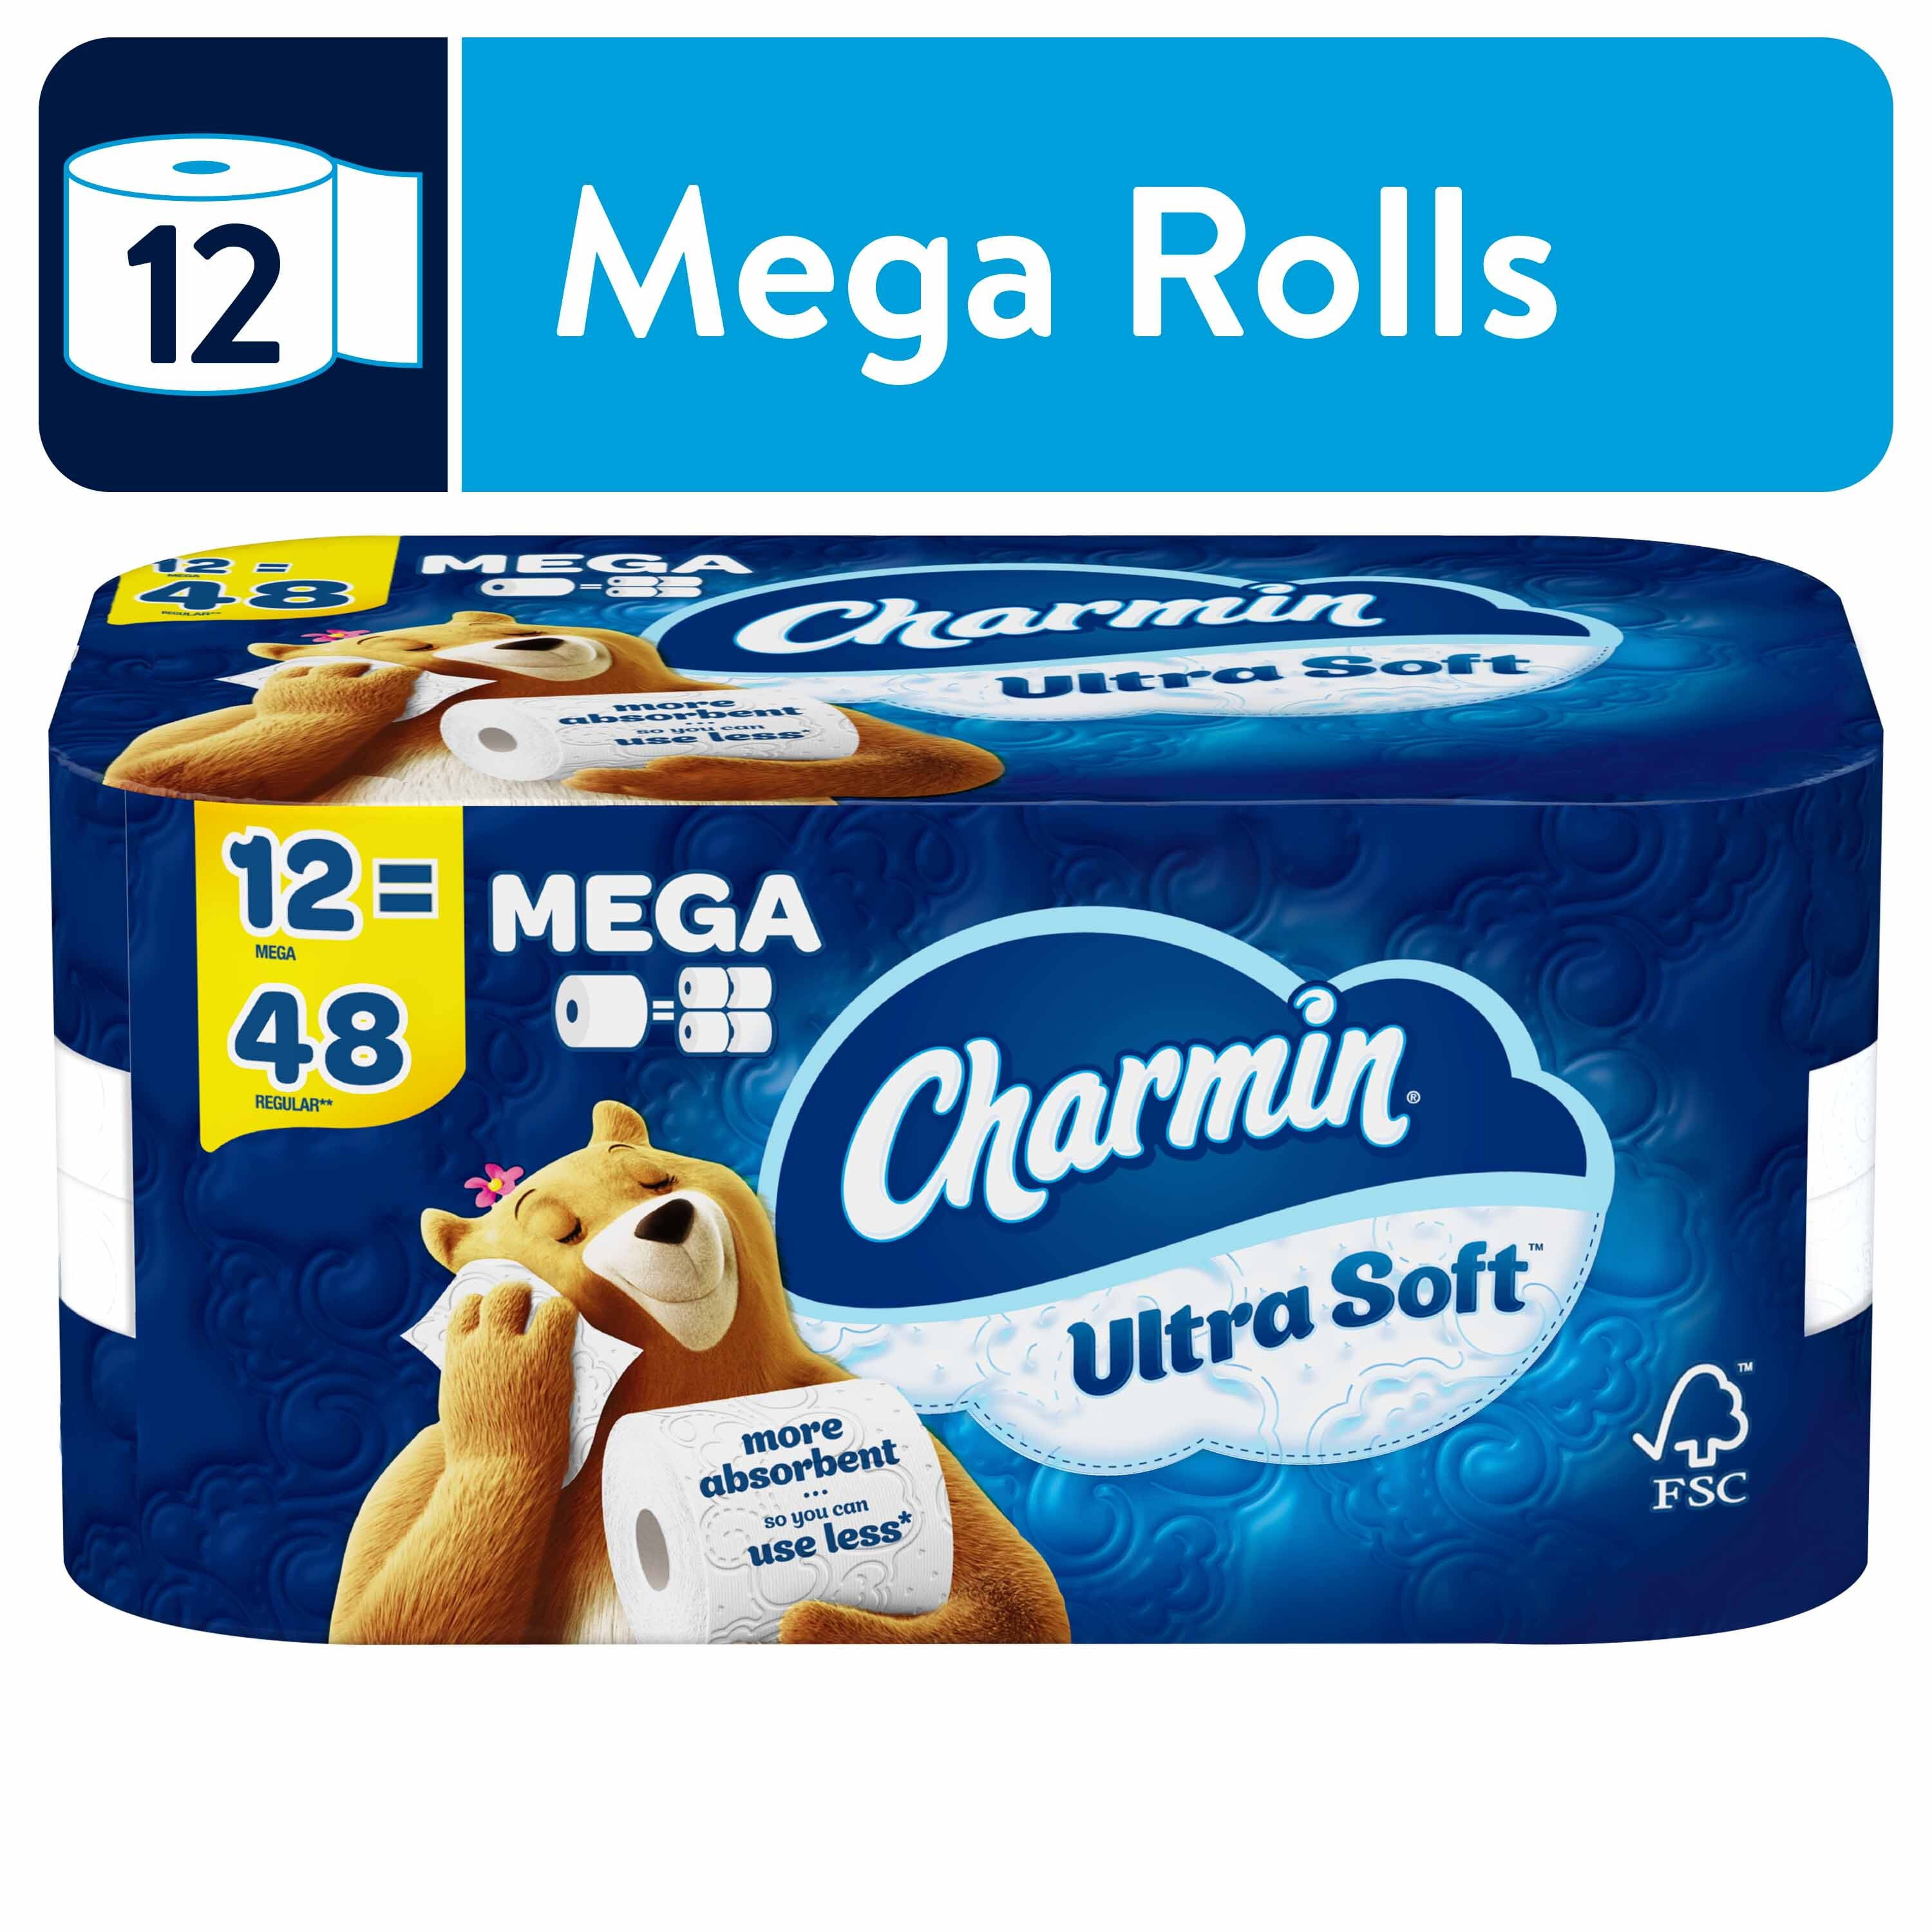 Charmin Ultra Soft Toilet Paper, 12 Mega Roll